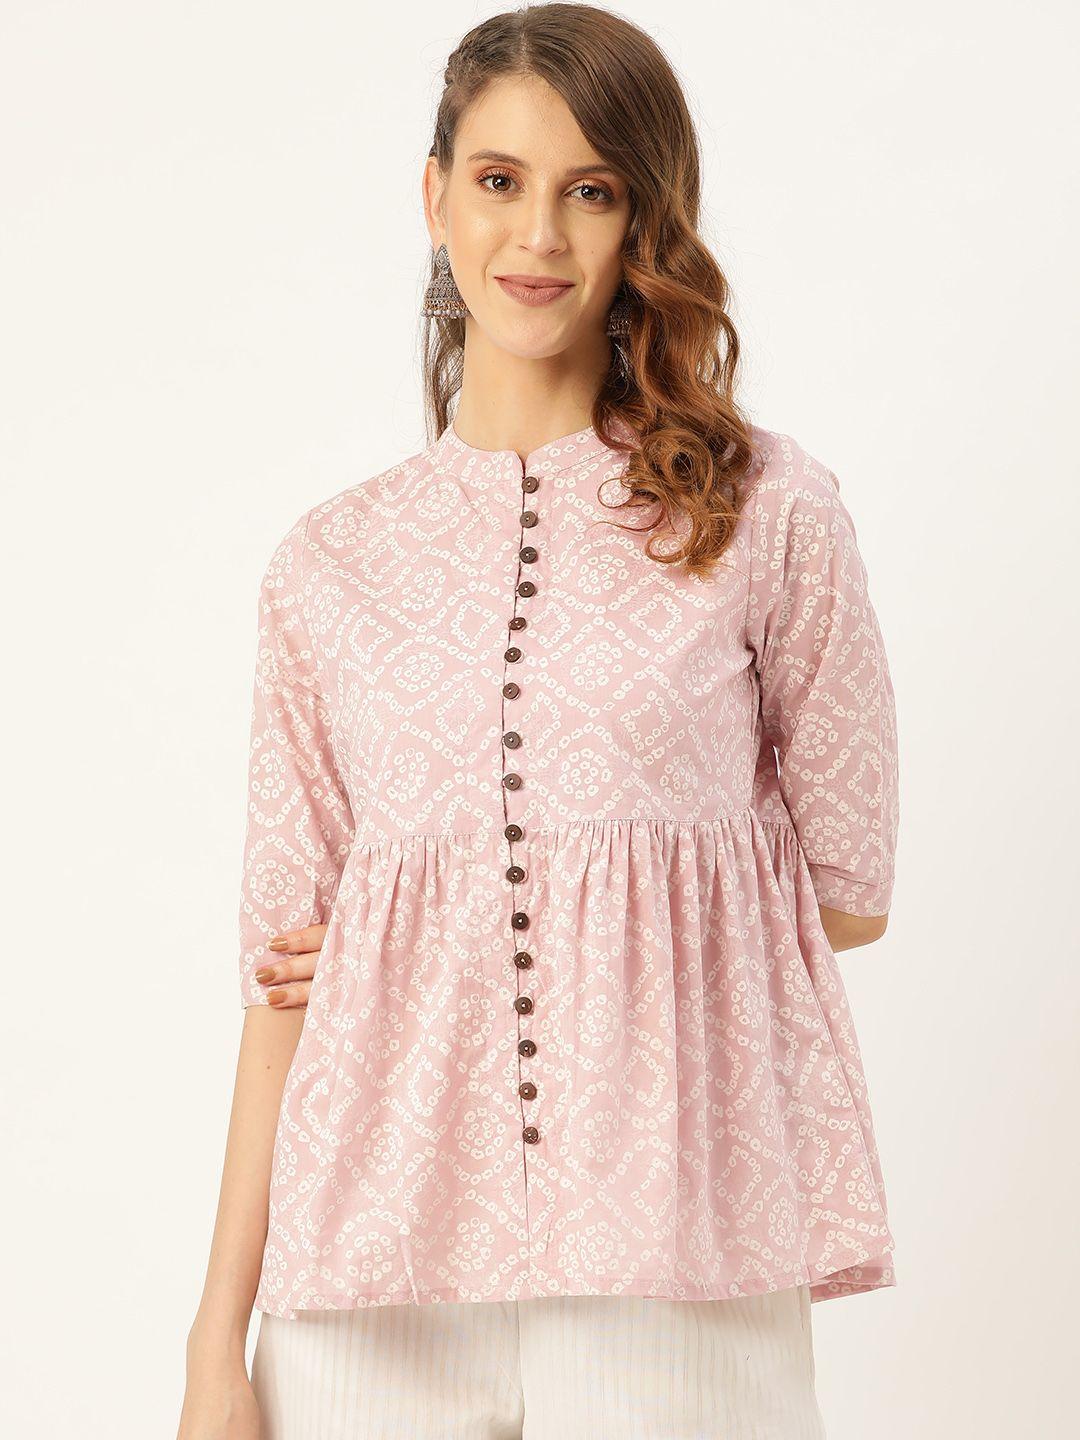 shae by sassafras women pink & white bandhej print a-line pure cotton top